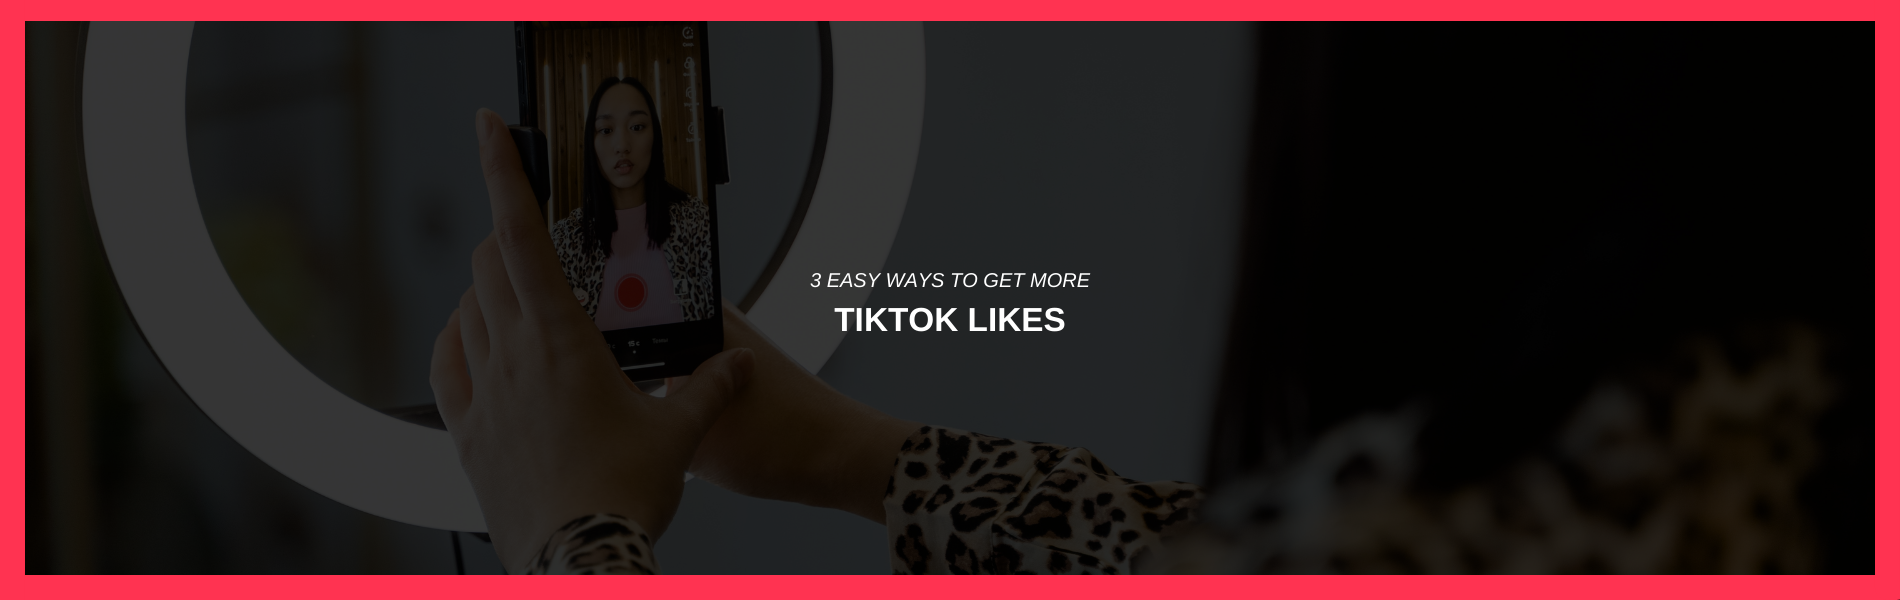 3 Easy Ways to Get Likes on TikTok